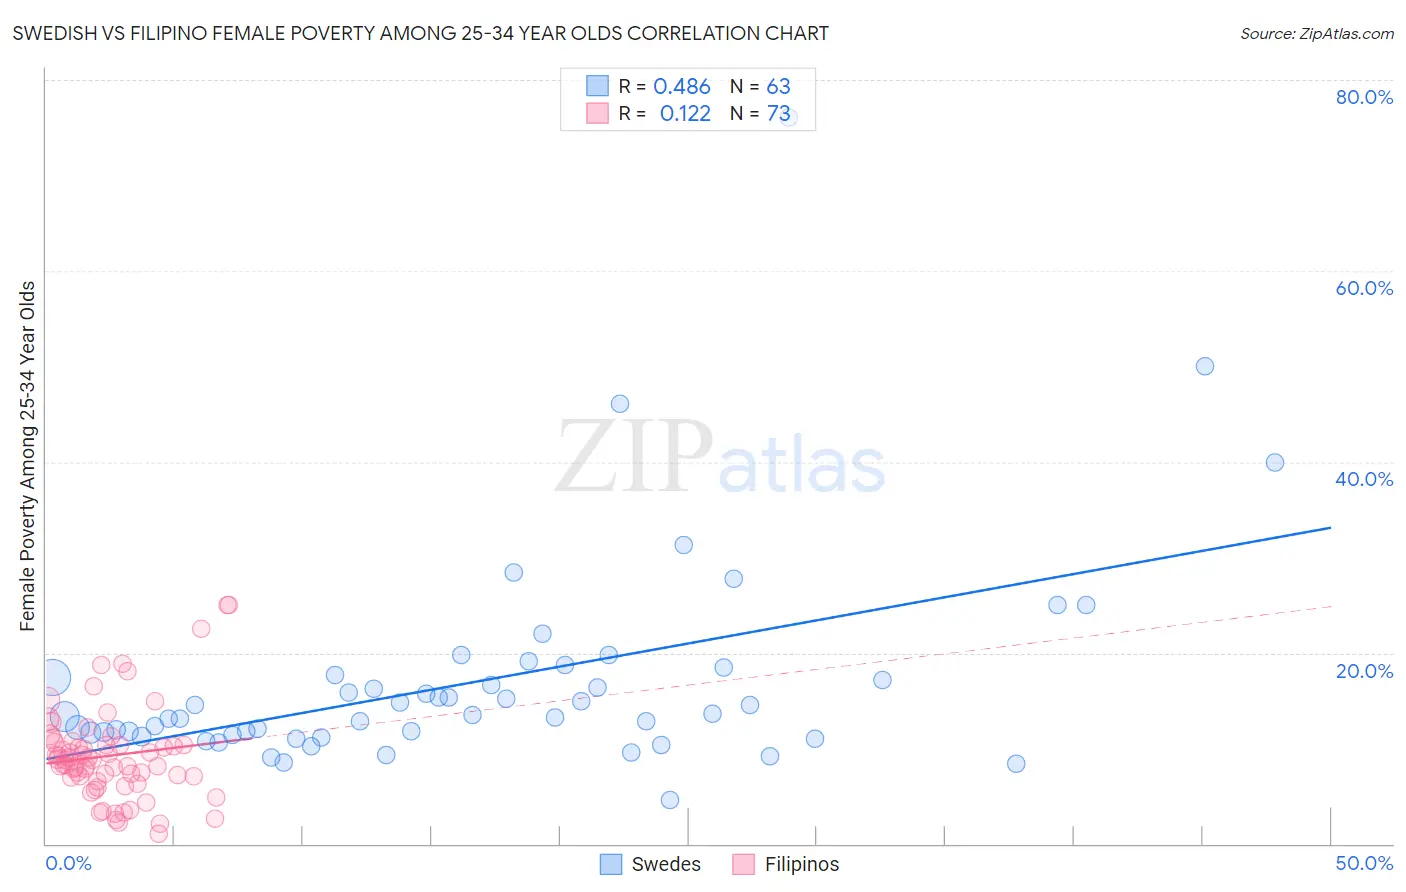 Swedish vs Filipino Female Poverty Among 25-34 Year Olds